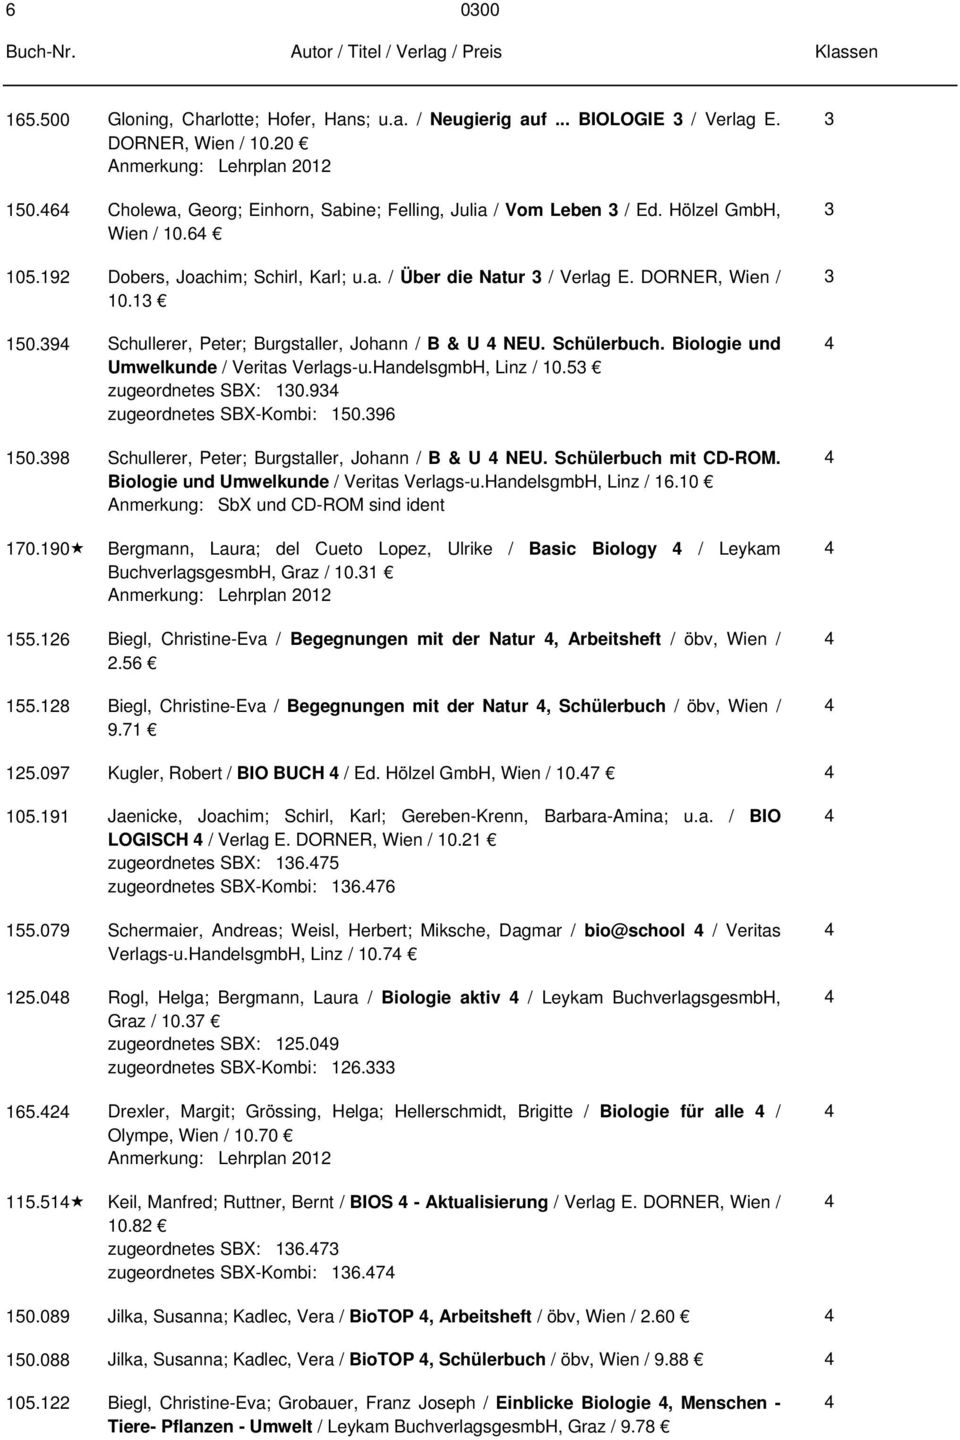 9 Schullerer, Peter; Burgstaller, Johann / B & U NEU. Schülerbuch. Biologie und Umwelkunde / Veritas Verlags-u.HandelsgmbH, Linz / 0.5 zugeordnetes SBX: 0.9 zugeordnetes SBX-Kombi: 50.96 50.